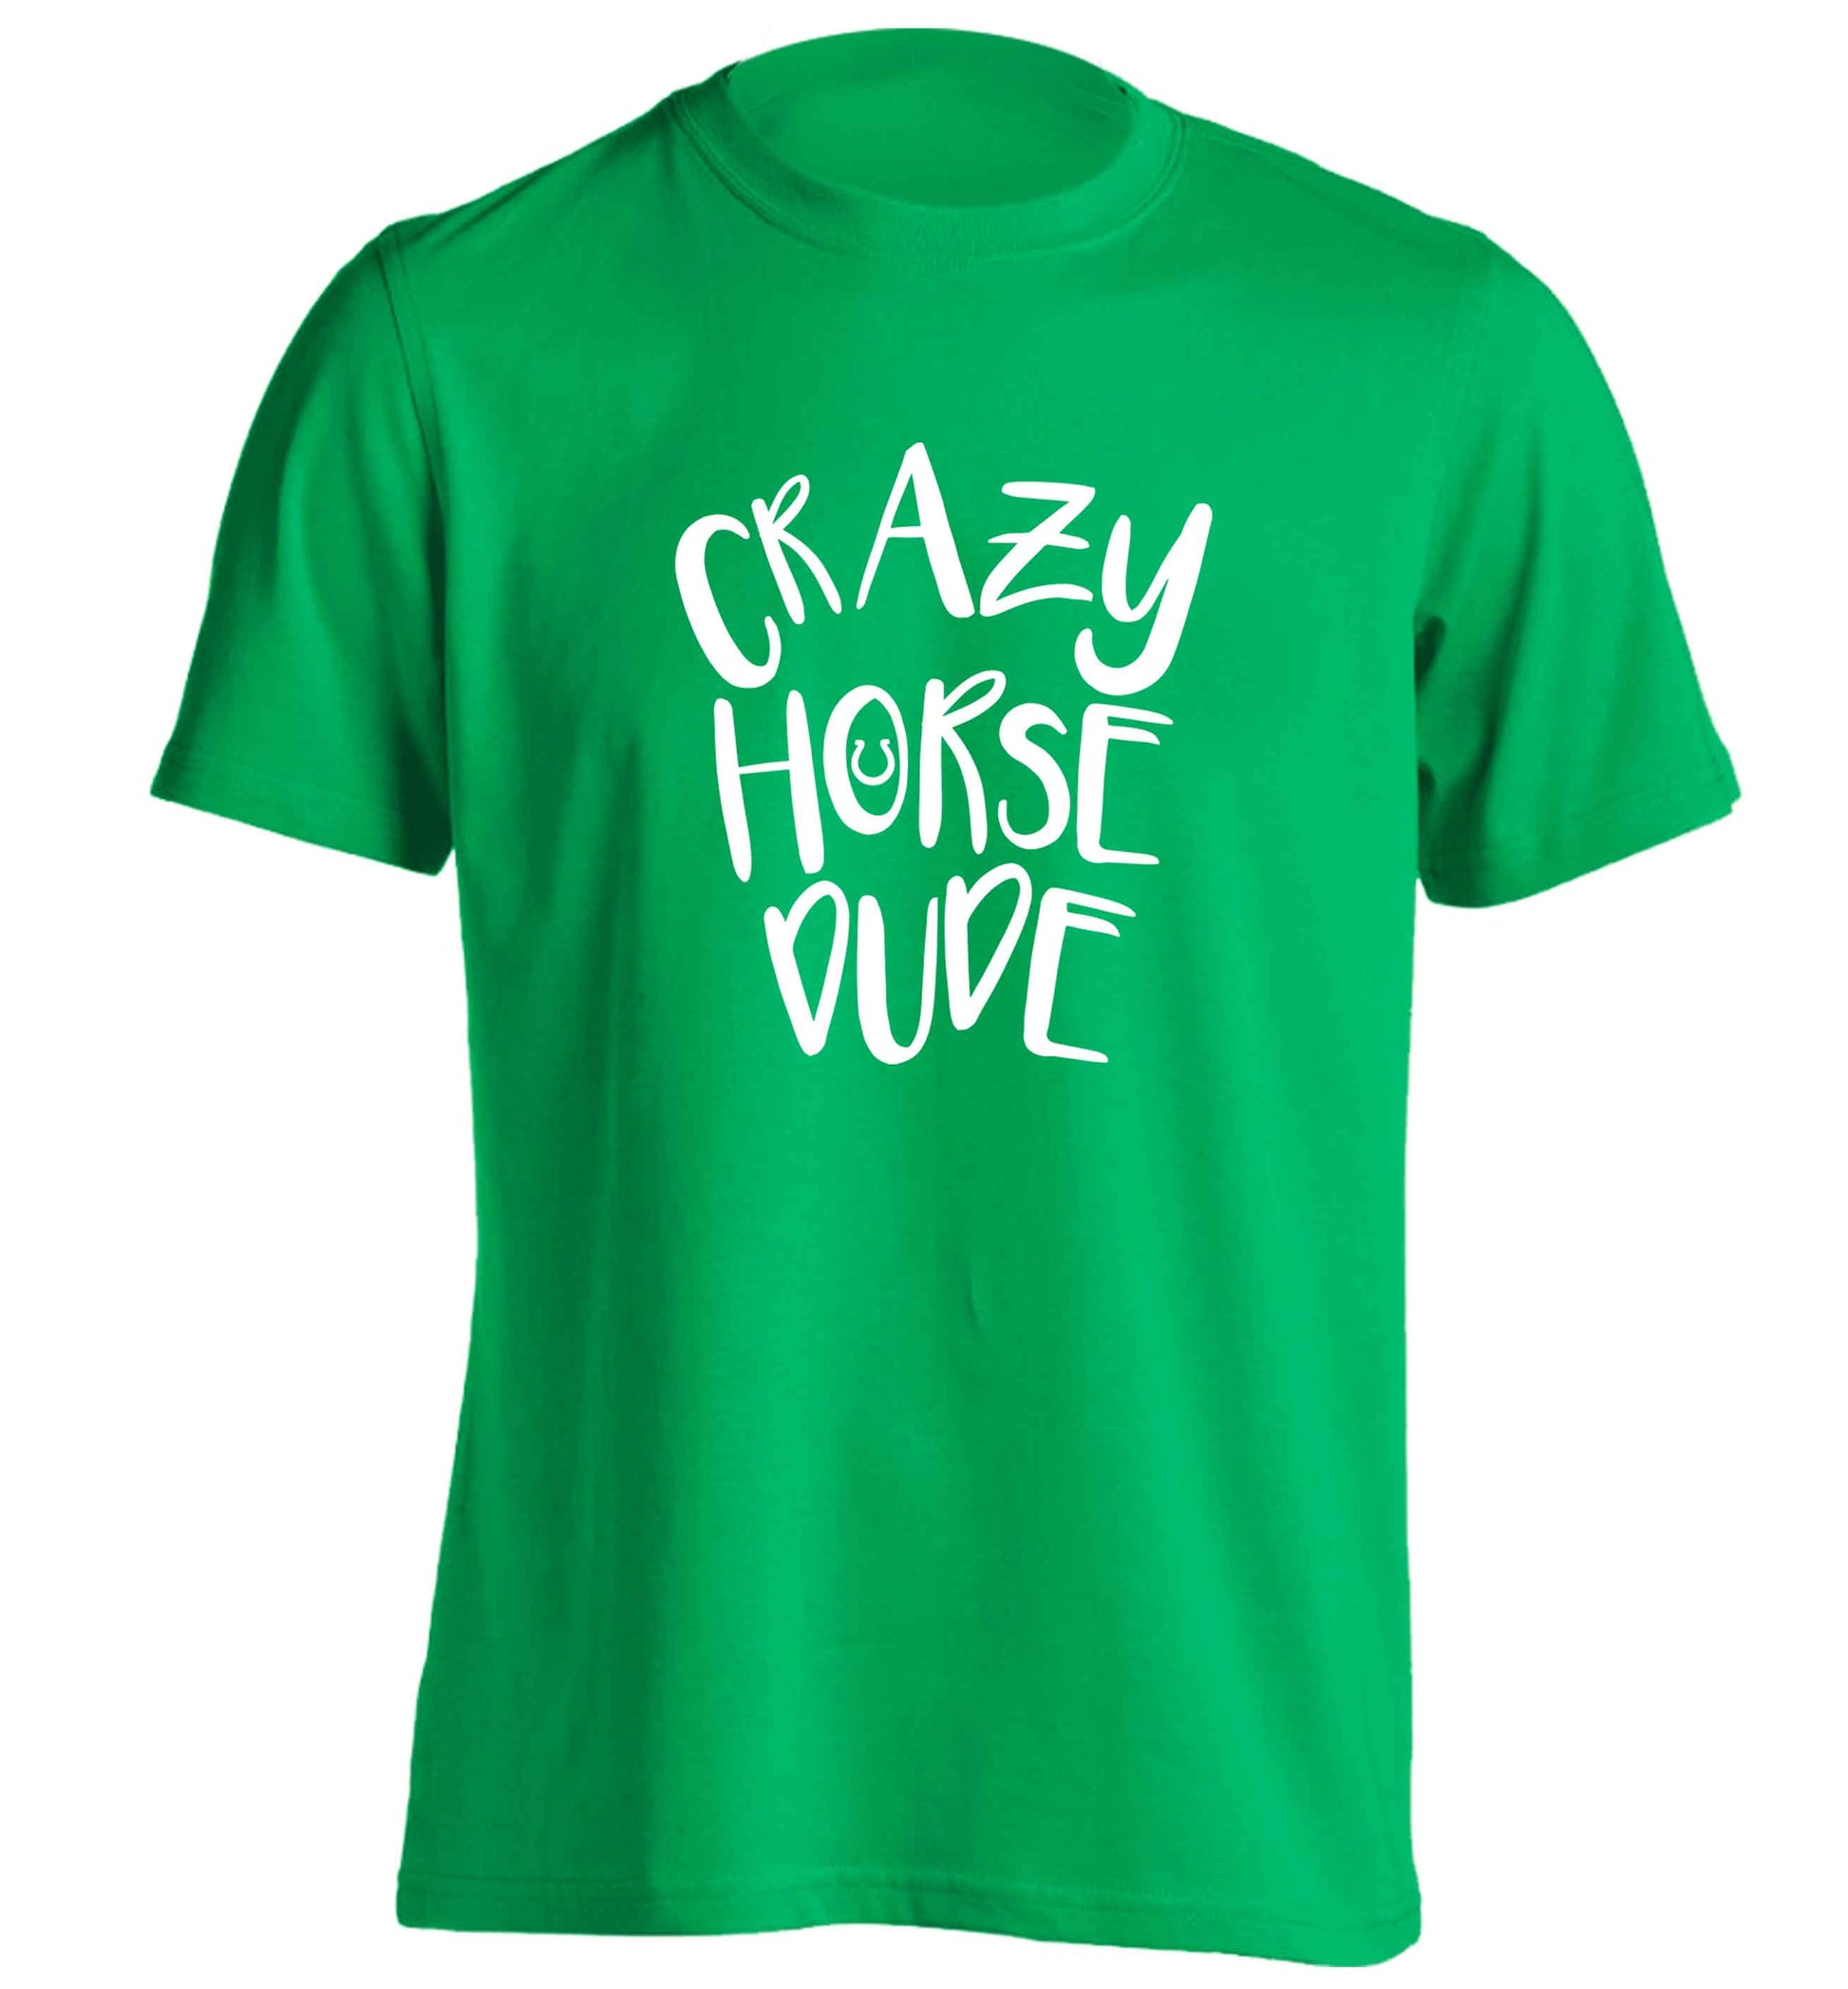 Crazy horse dude adults unisex green Tshirt 2XL